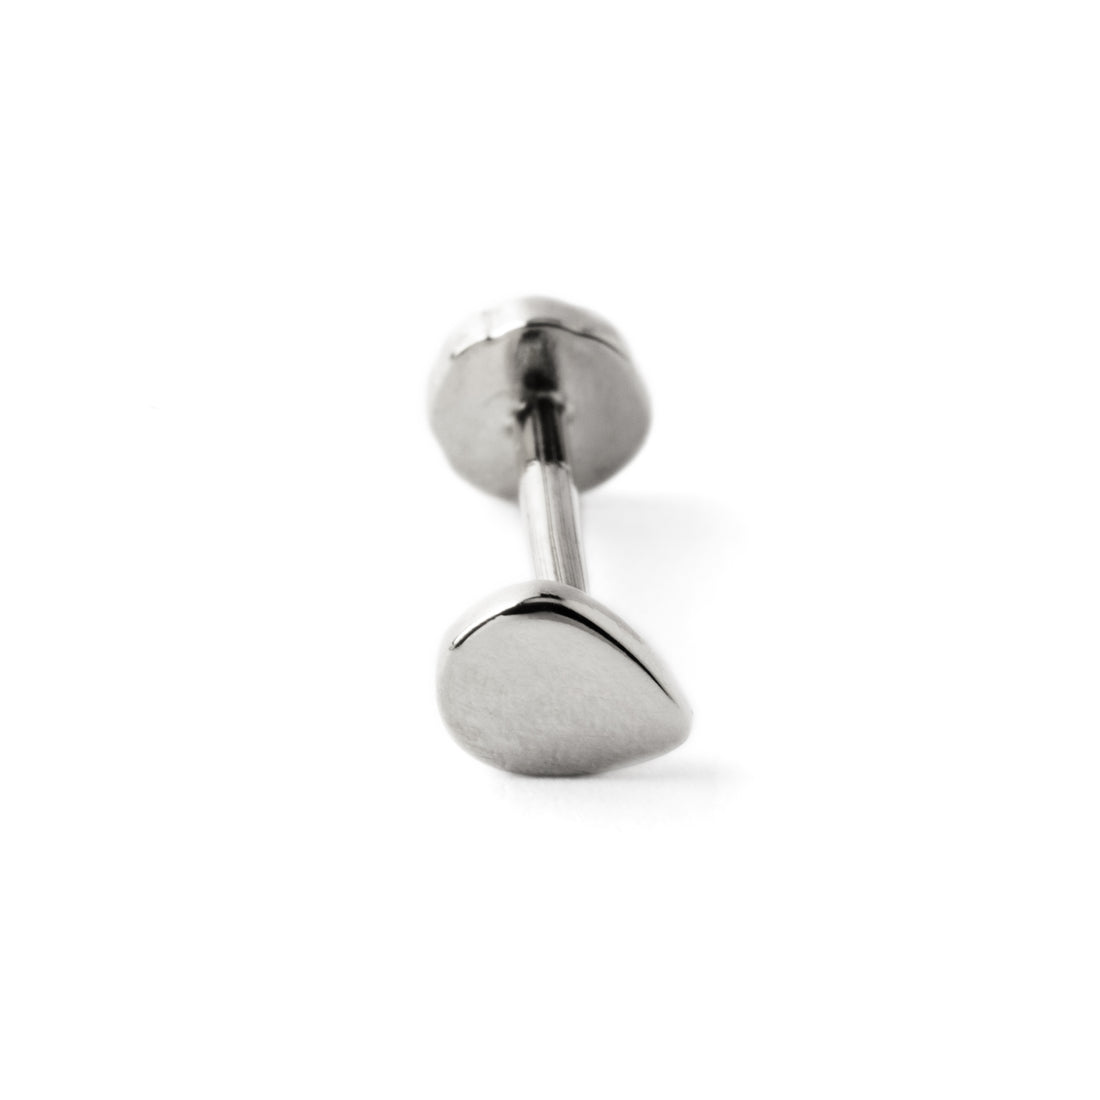 14k white Gold internally threaded screw back earring 1.2mm (16g), 8mm, teardrop labret stud frontal view